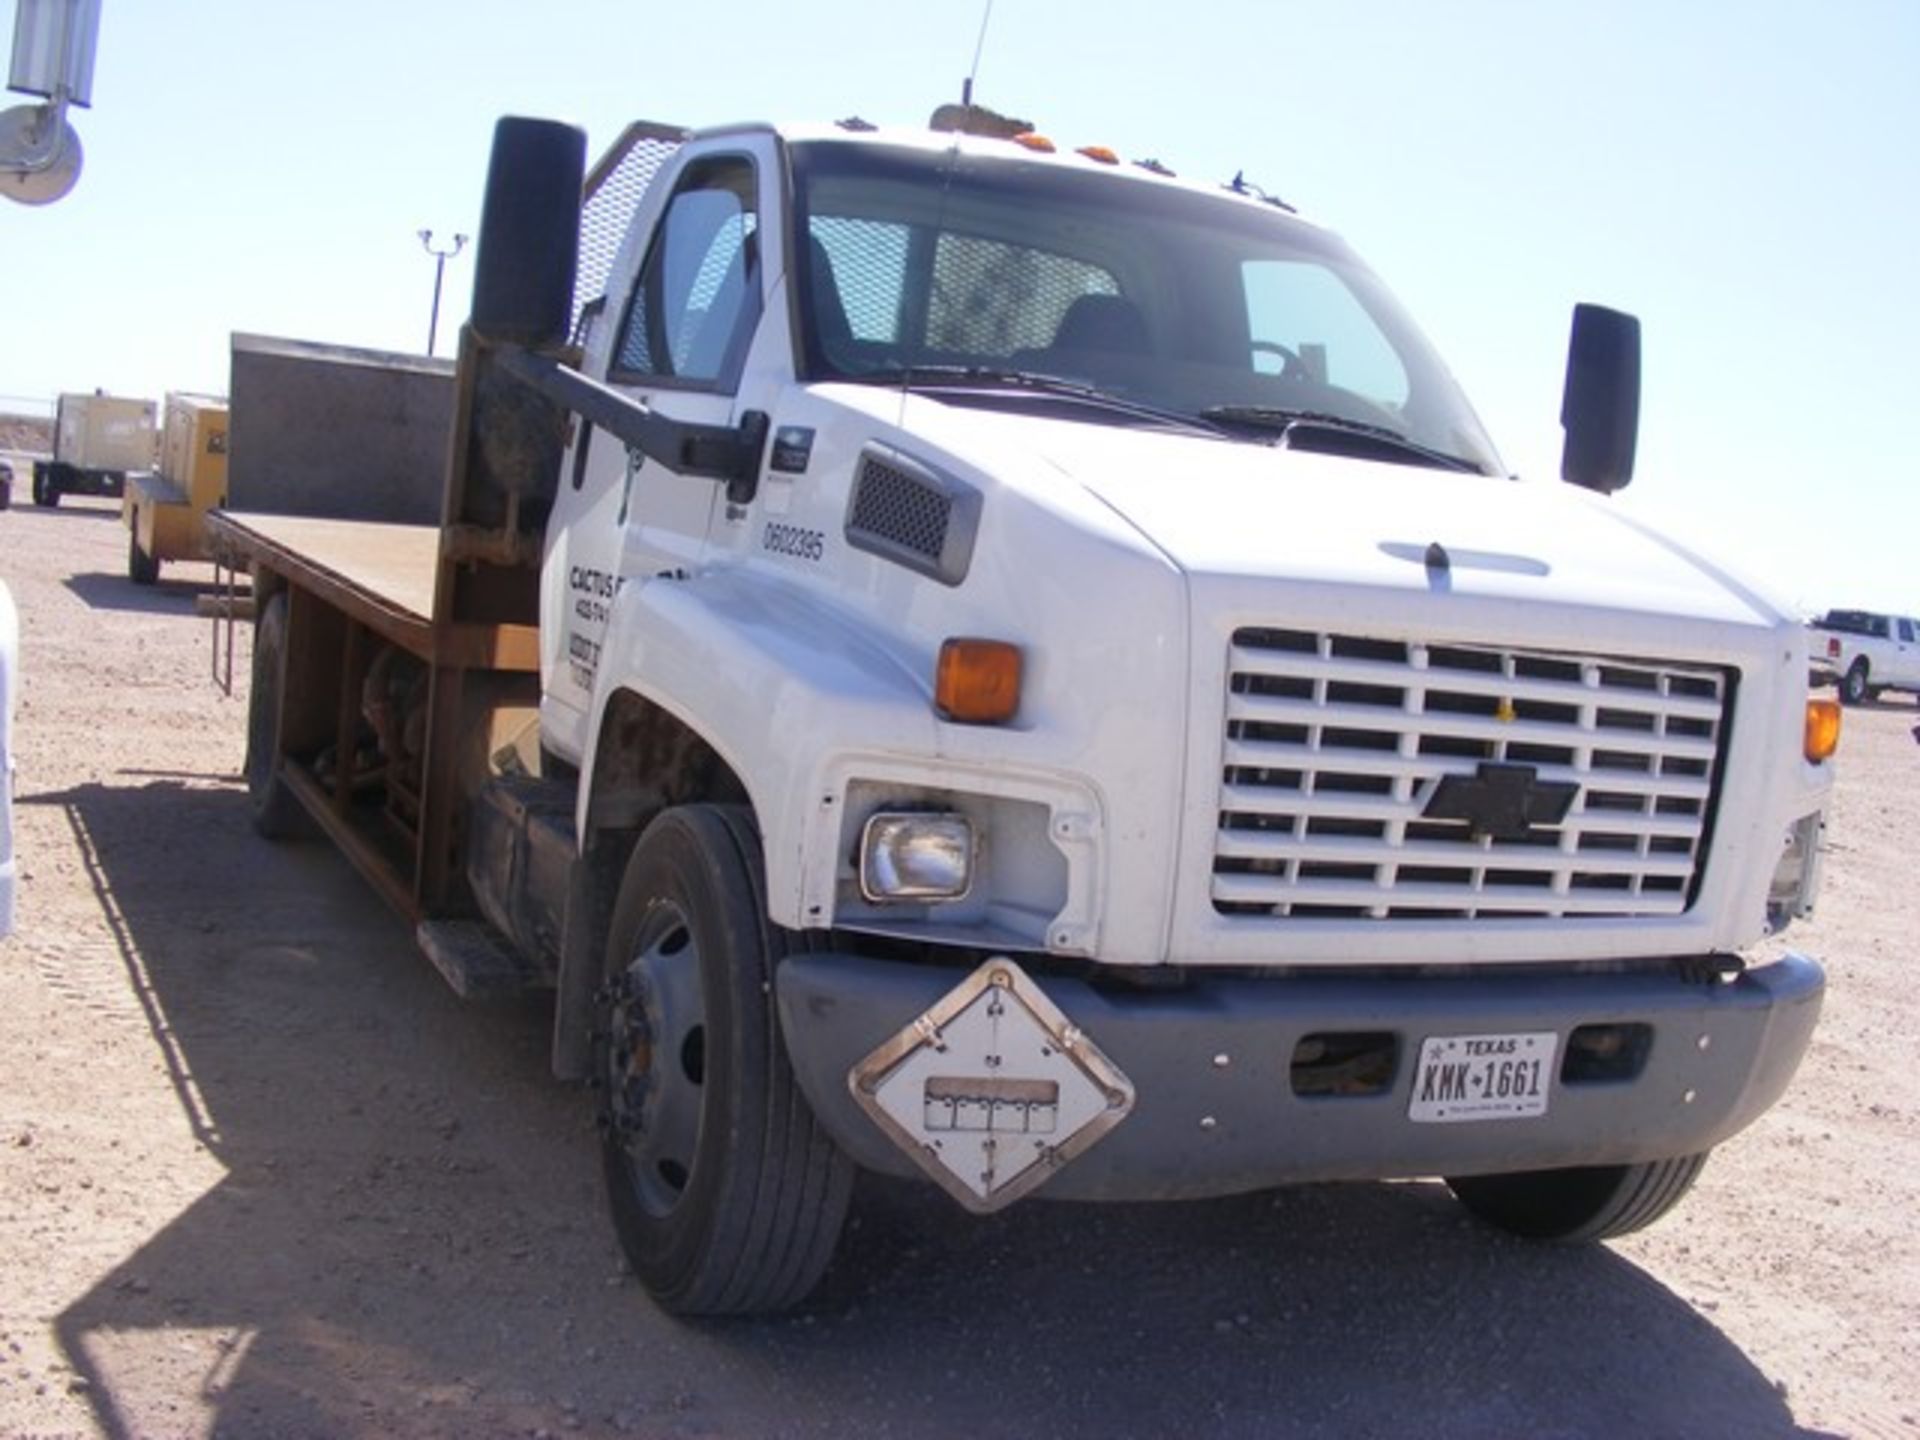 Located in YARD 1 - Midland, TX (2395) (X) 2006 CHEVROLET C7500 S/A DAY CAB STAKE BED TRUCK, VIN- - Bild 2 aus 10